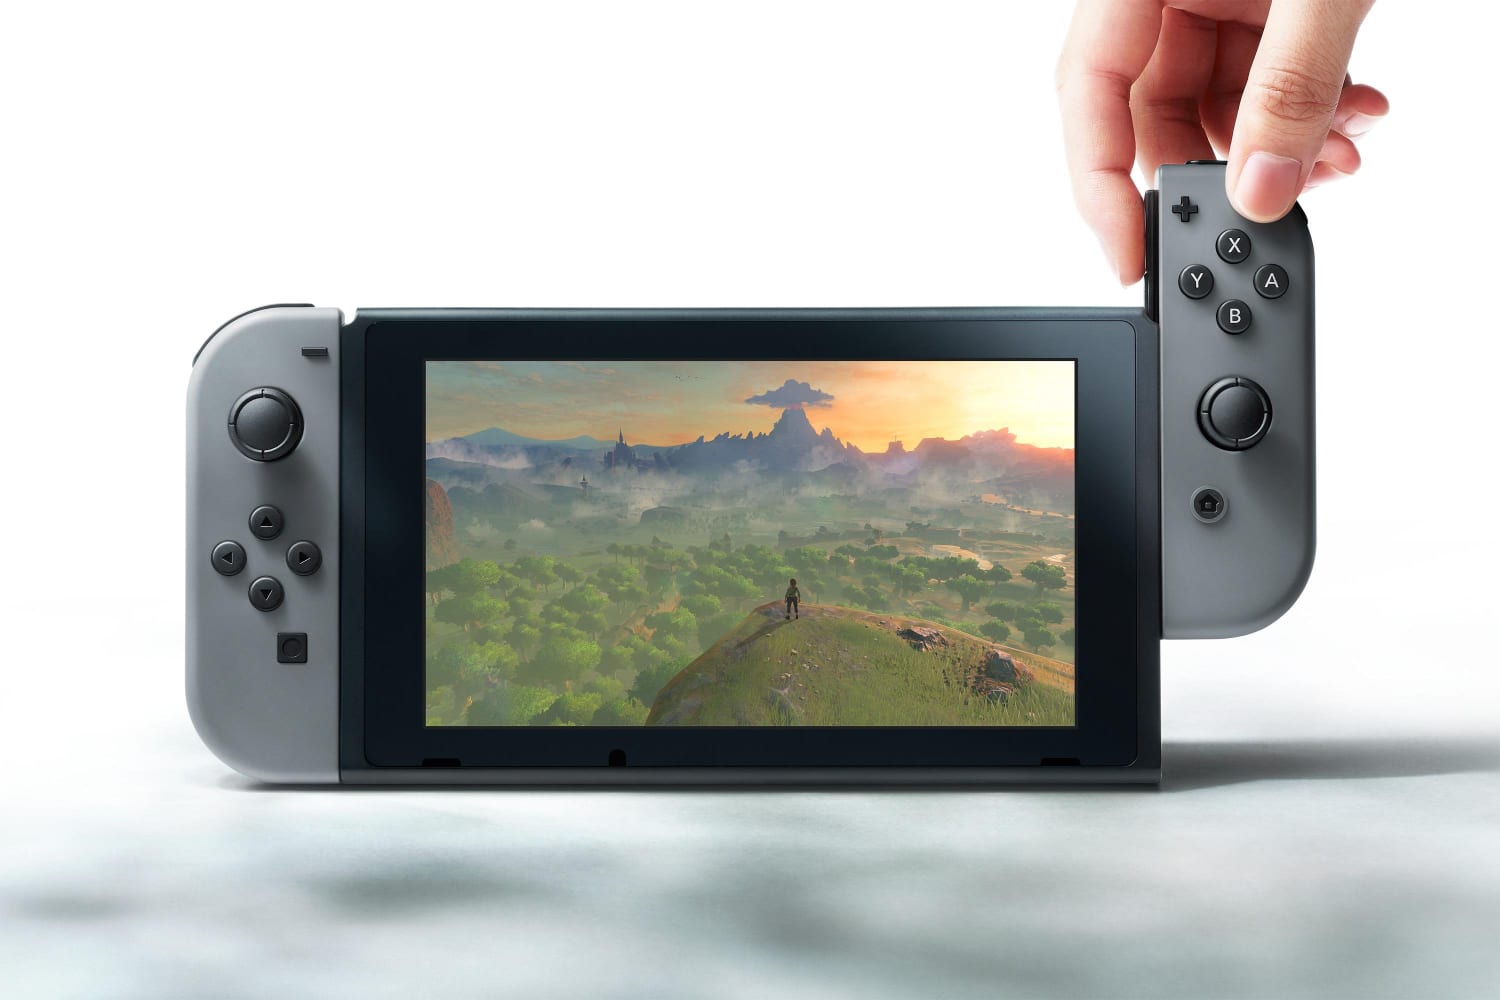 mafsal koridor Merdiven  Nintendo Switch game console: 12 things we need to know